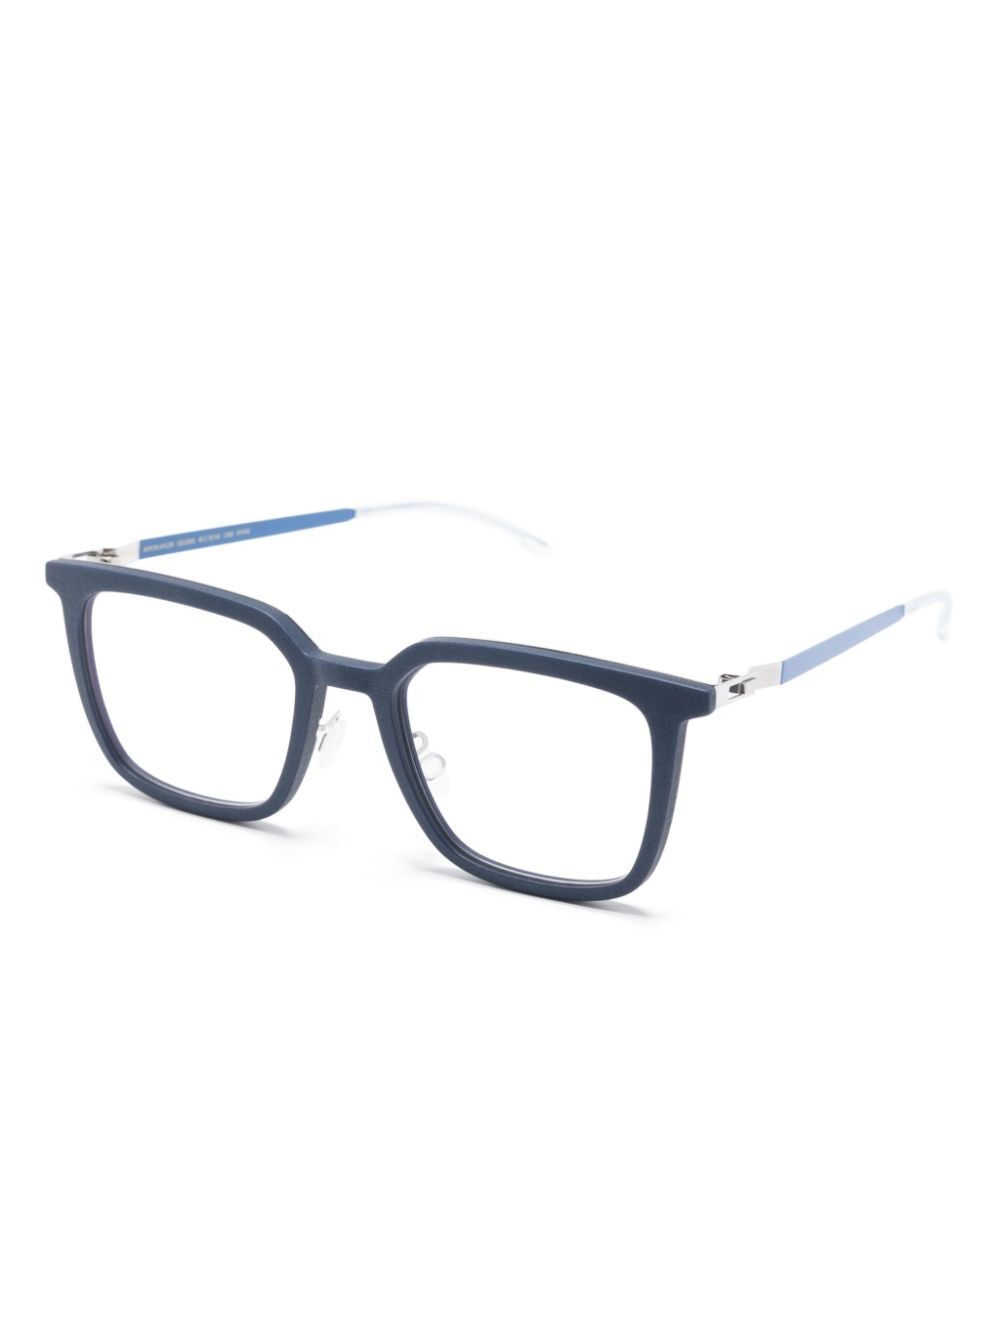 Mykita Kolding 628 bril met vierkant montuur - Blauw